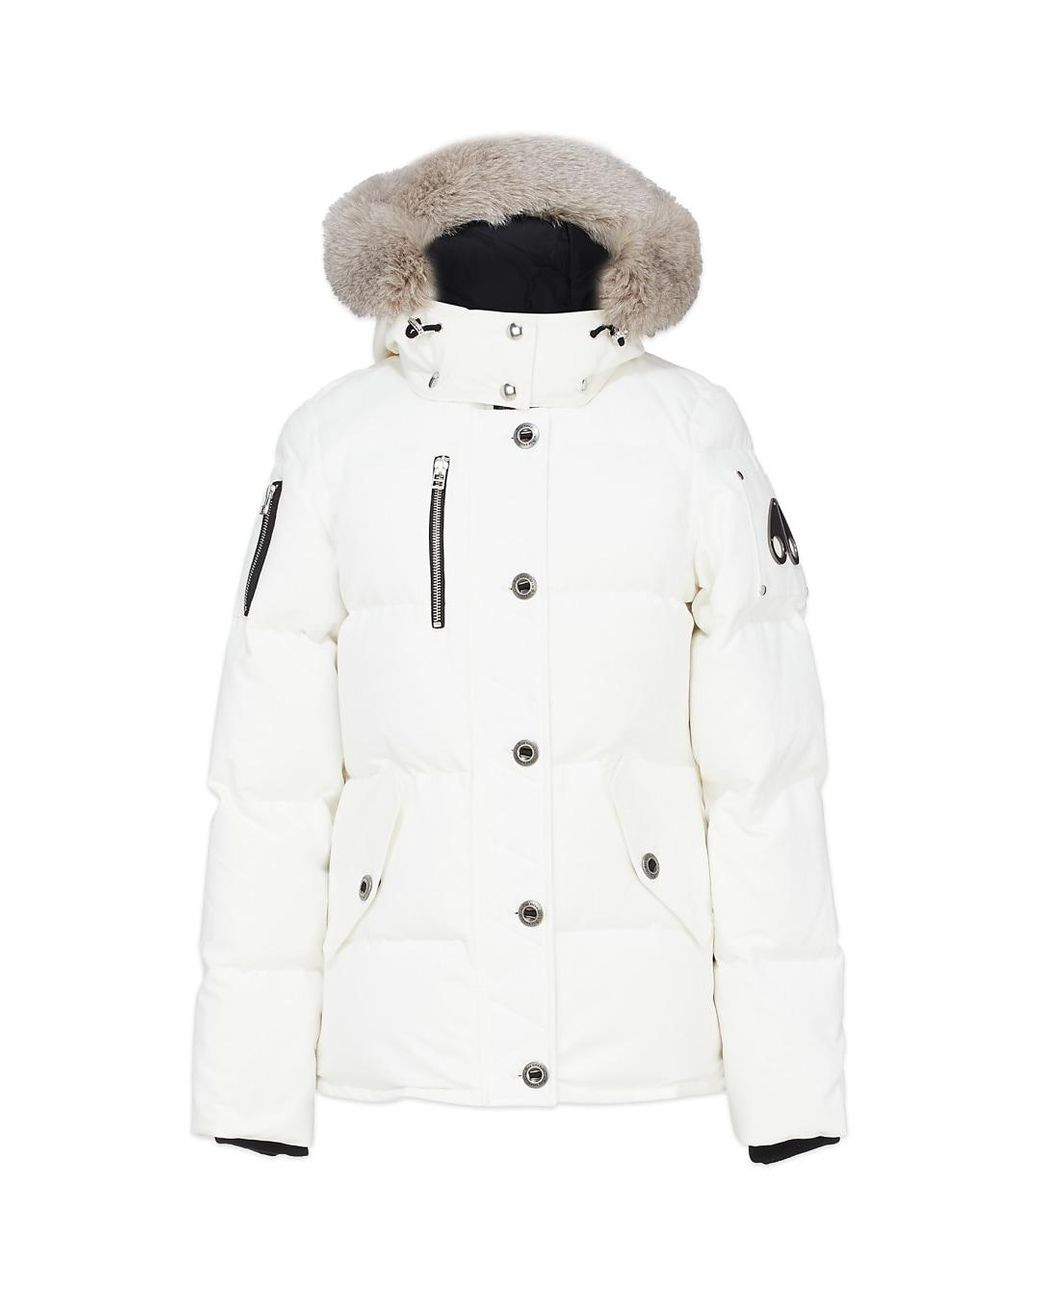 Moose Knuckles Fur 3q Jacket in White Lyst